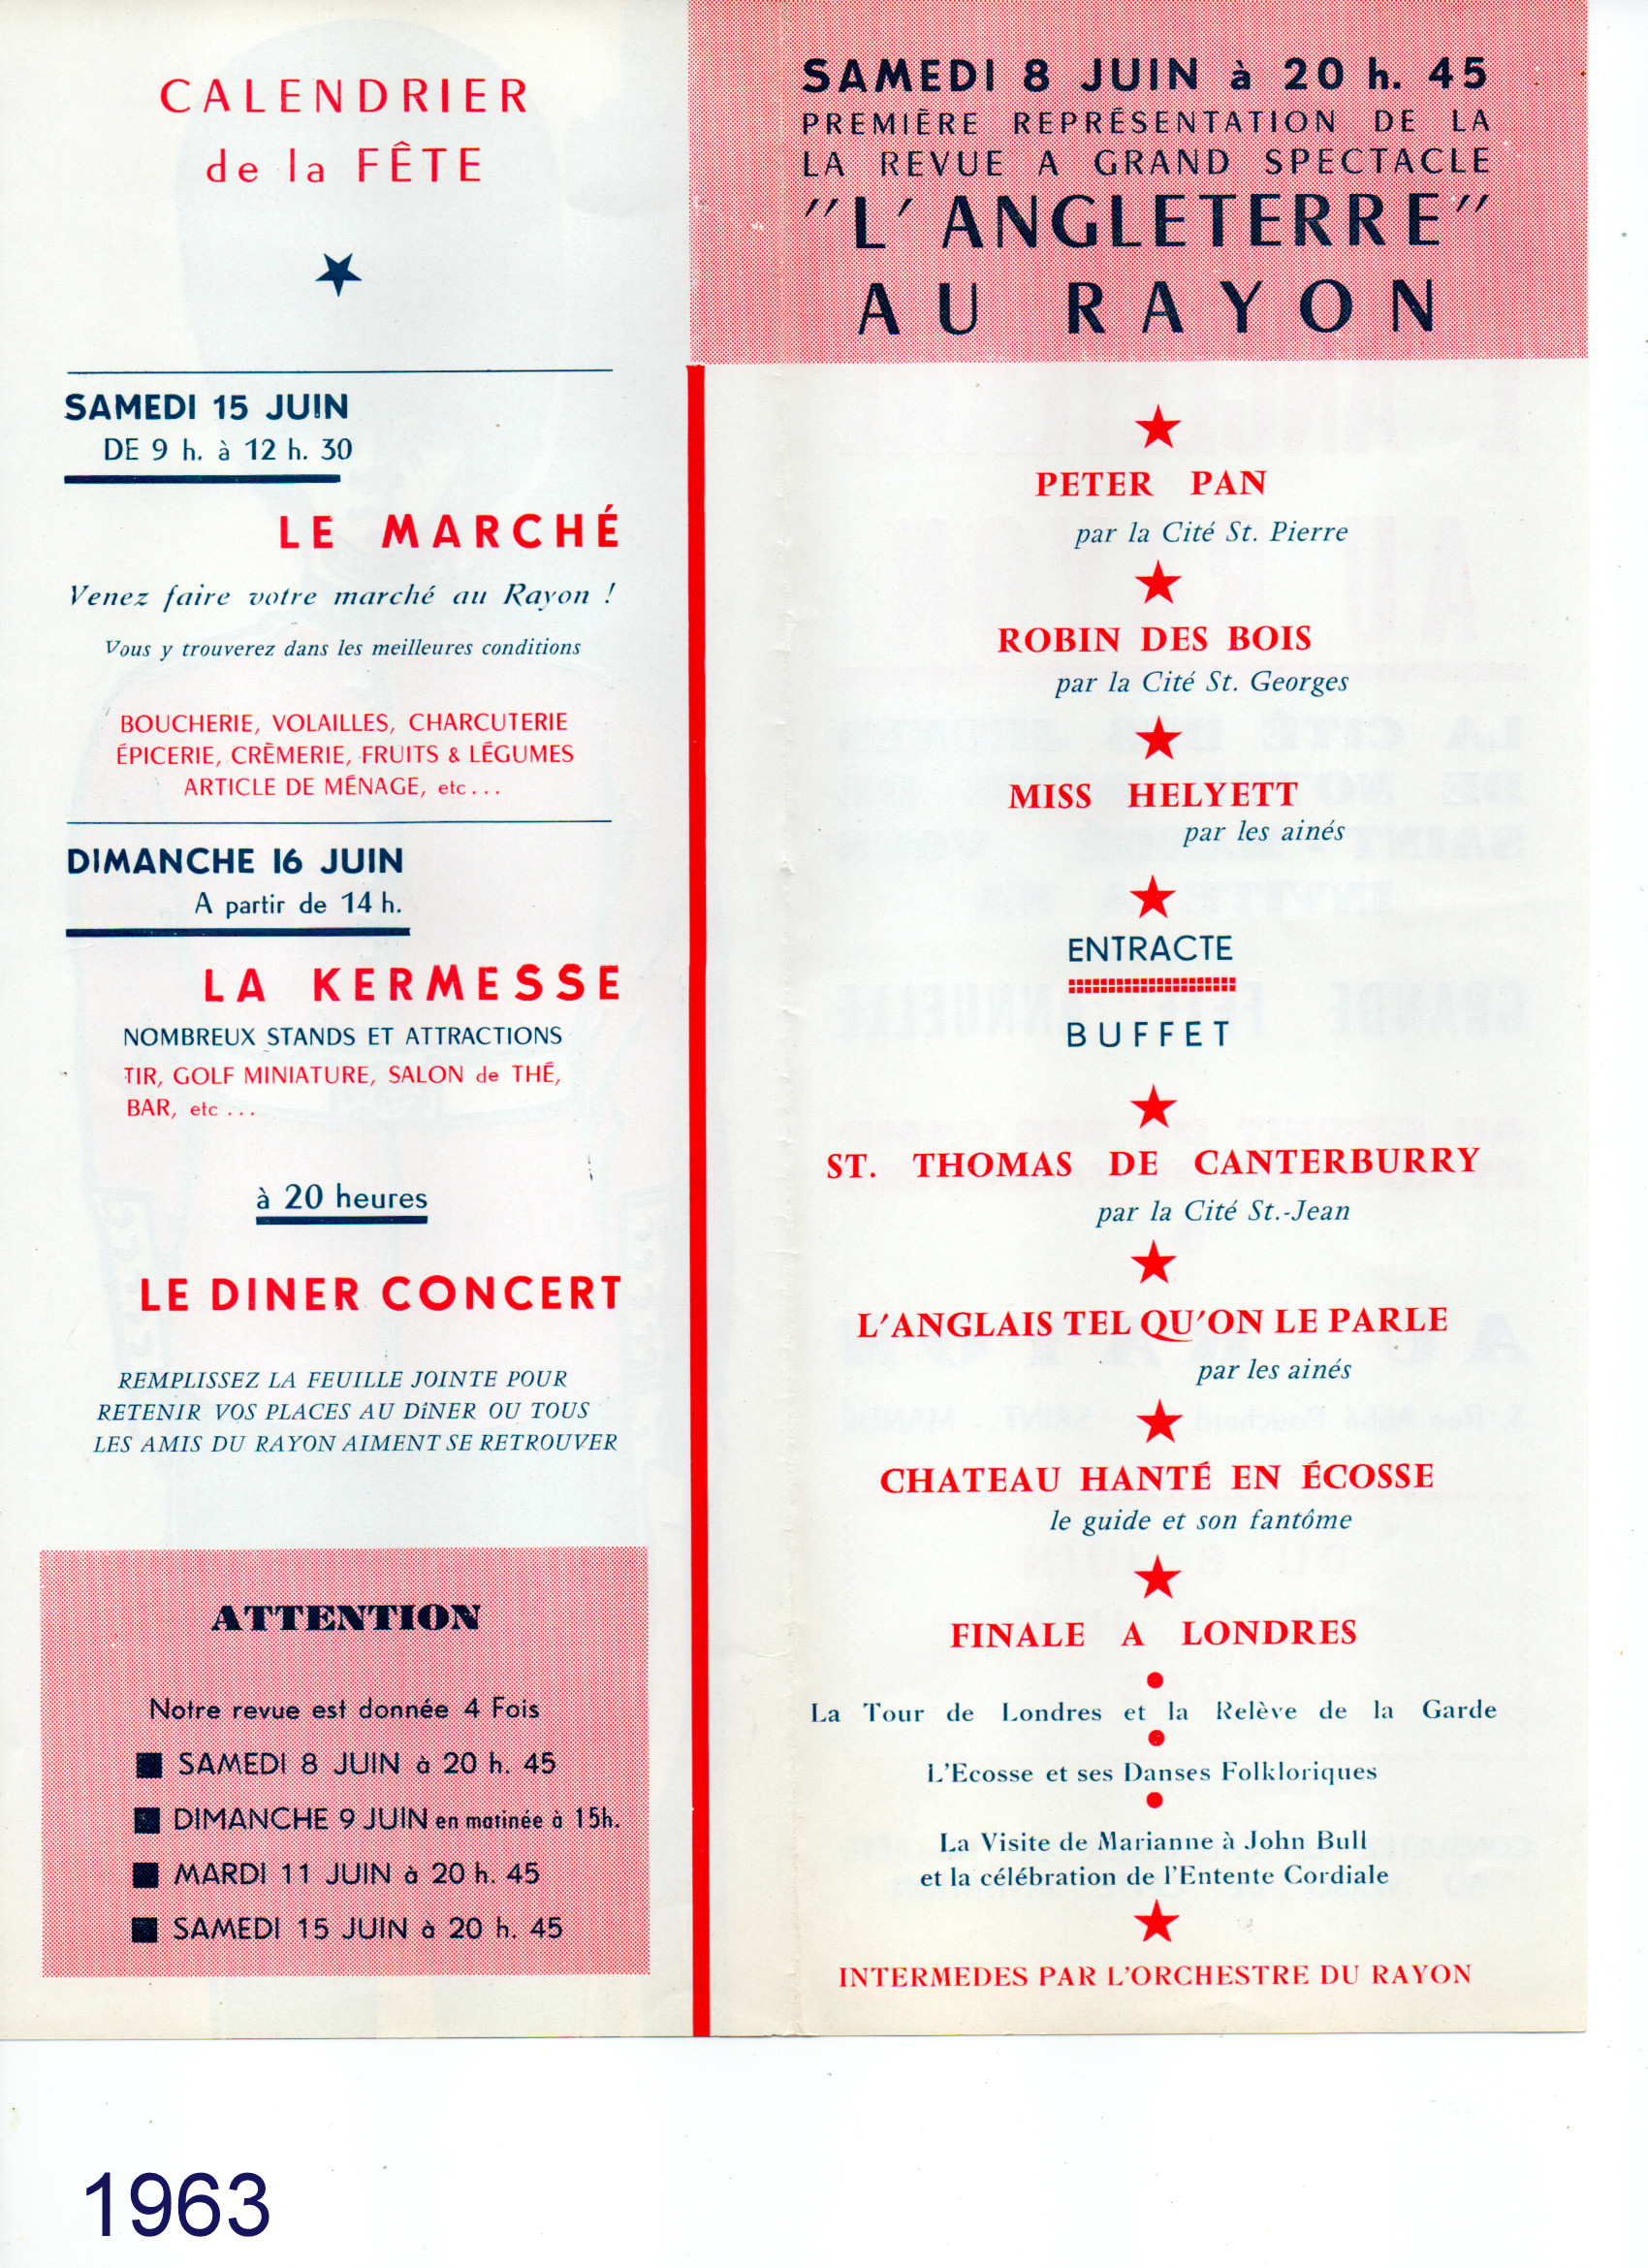 Affiche du Rayon 1963 (verso)